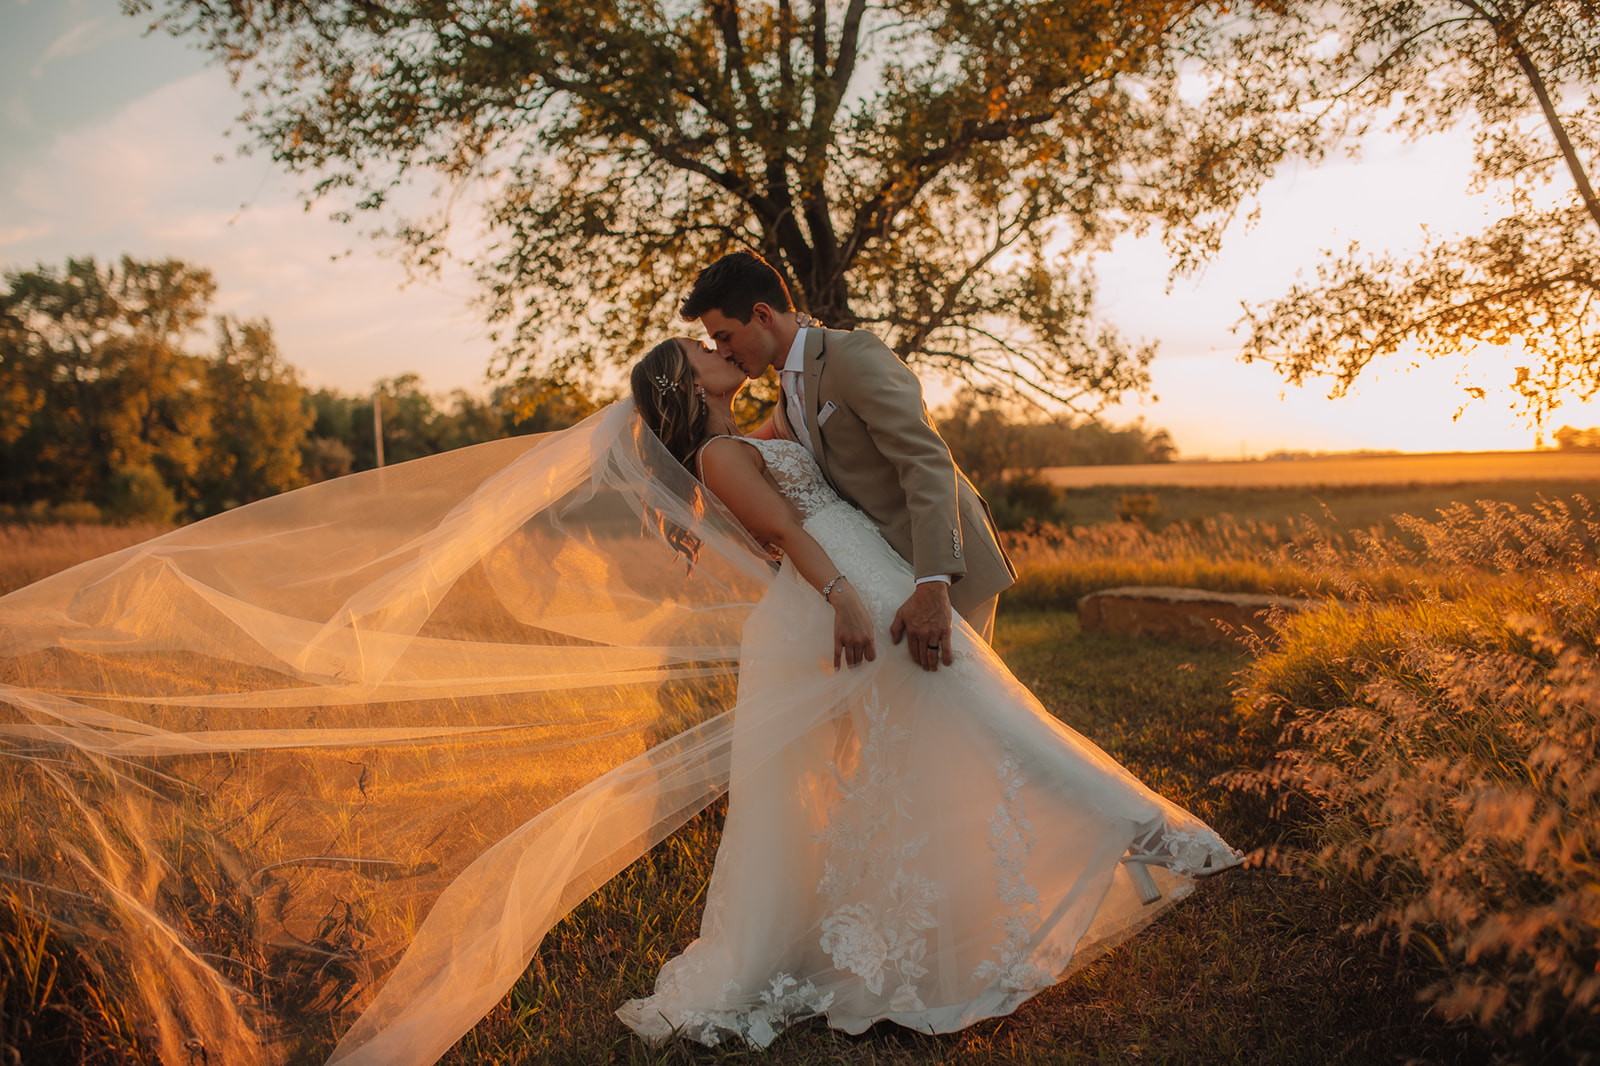 North Dakota Bride and Groom Sunset Portraits at Lone Oak Farm wedding venue